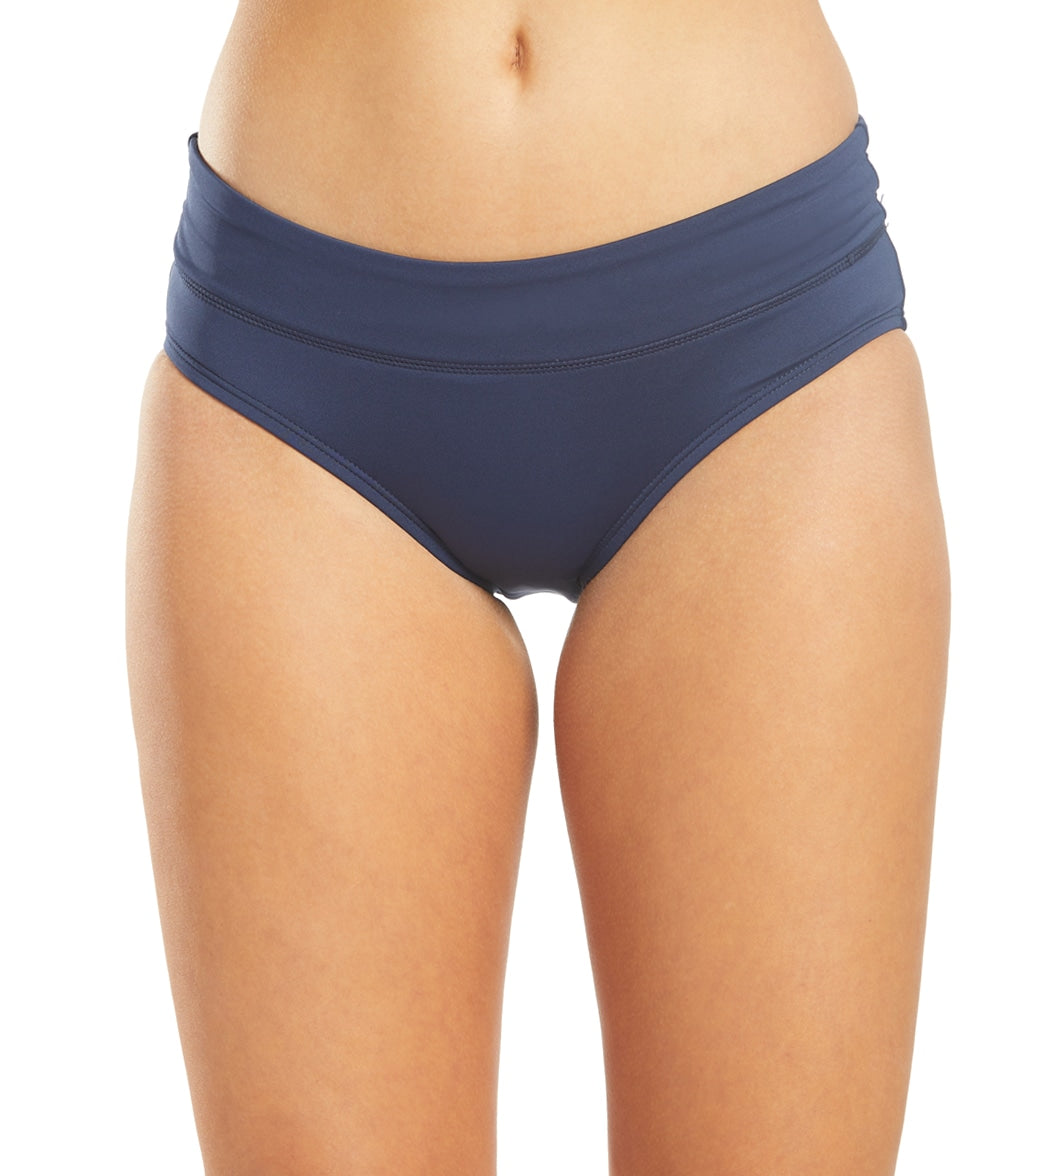 Nike Women's Essential Full Bikini Bottom at